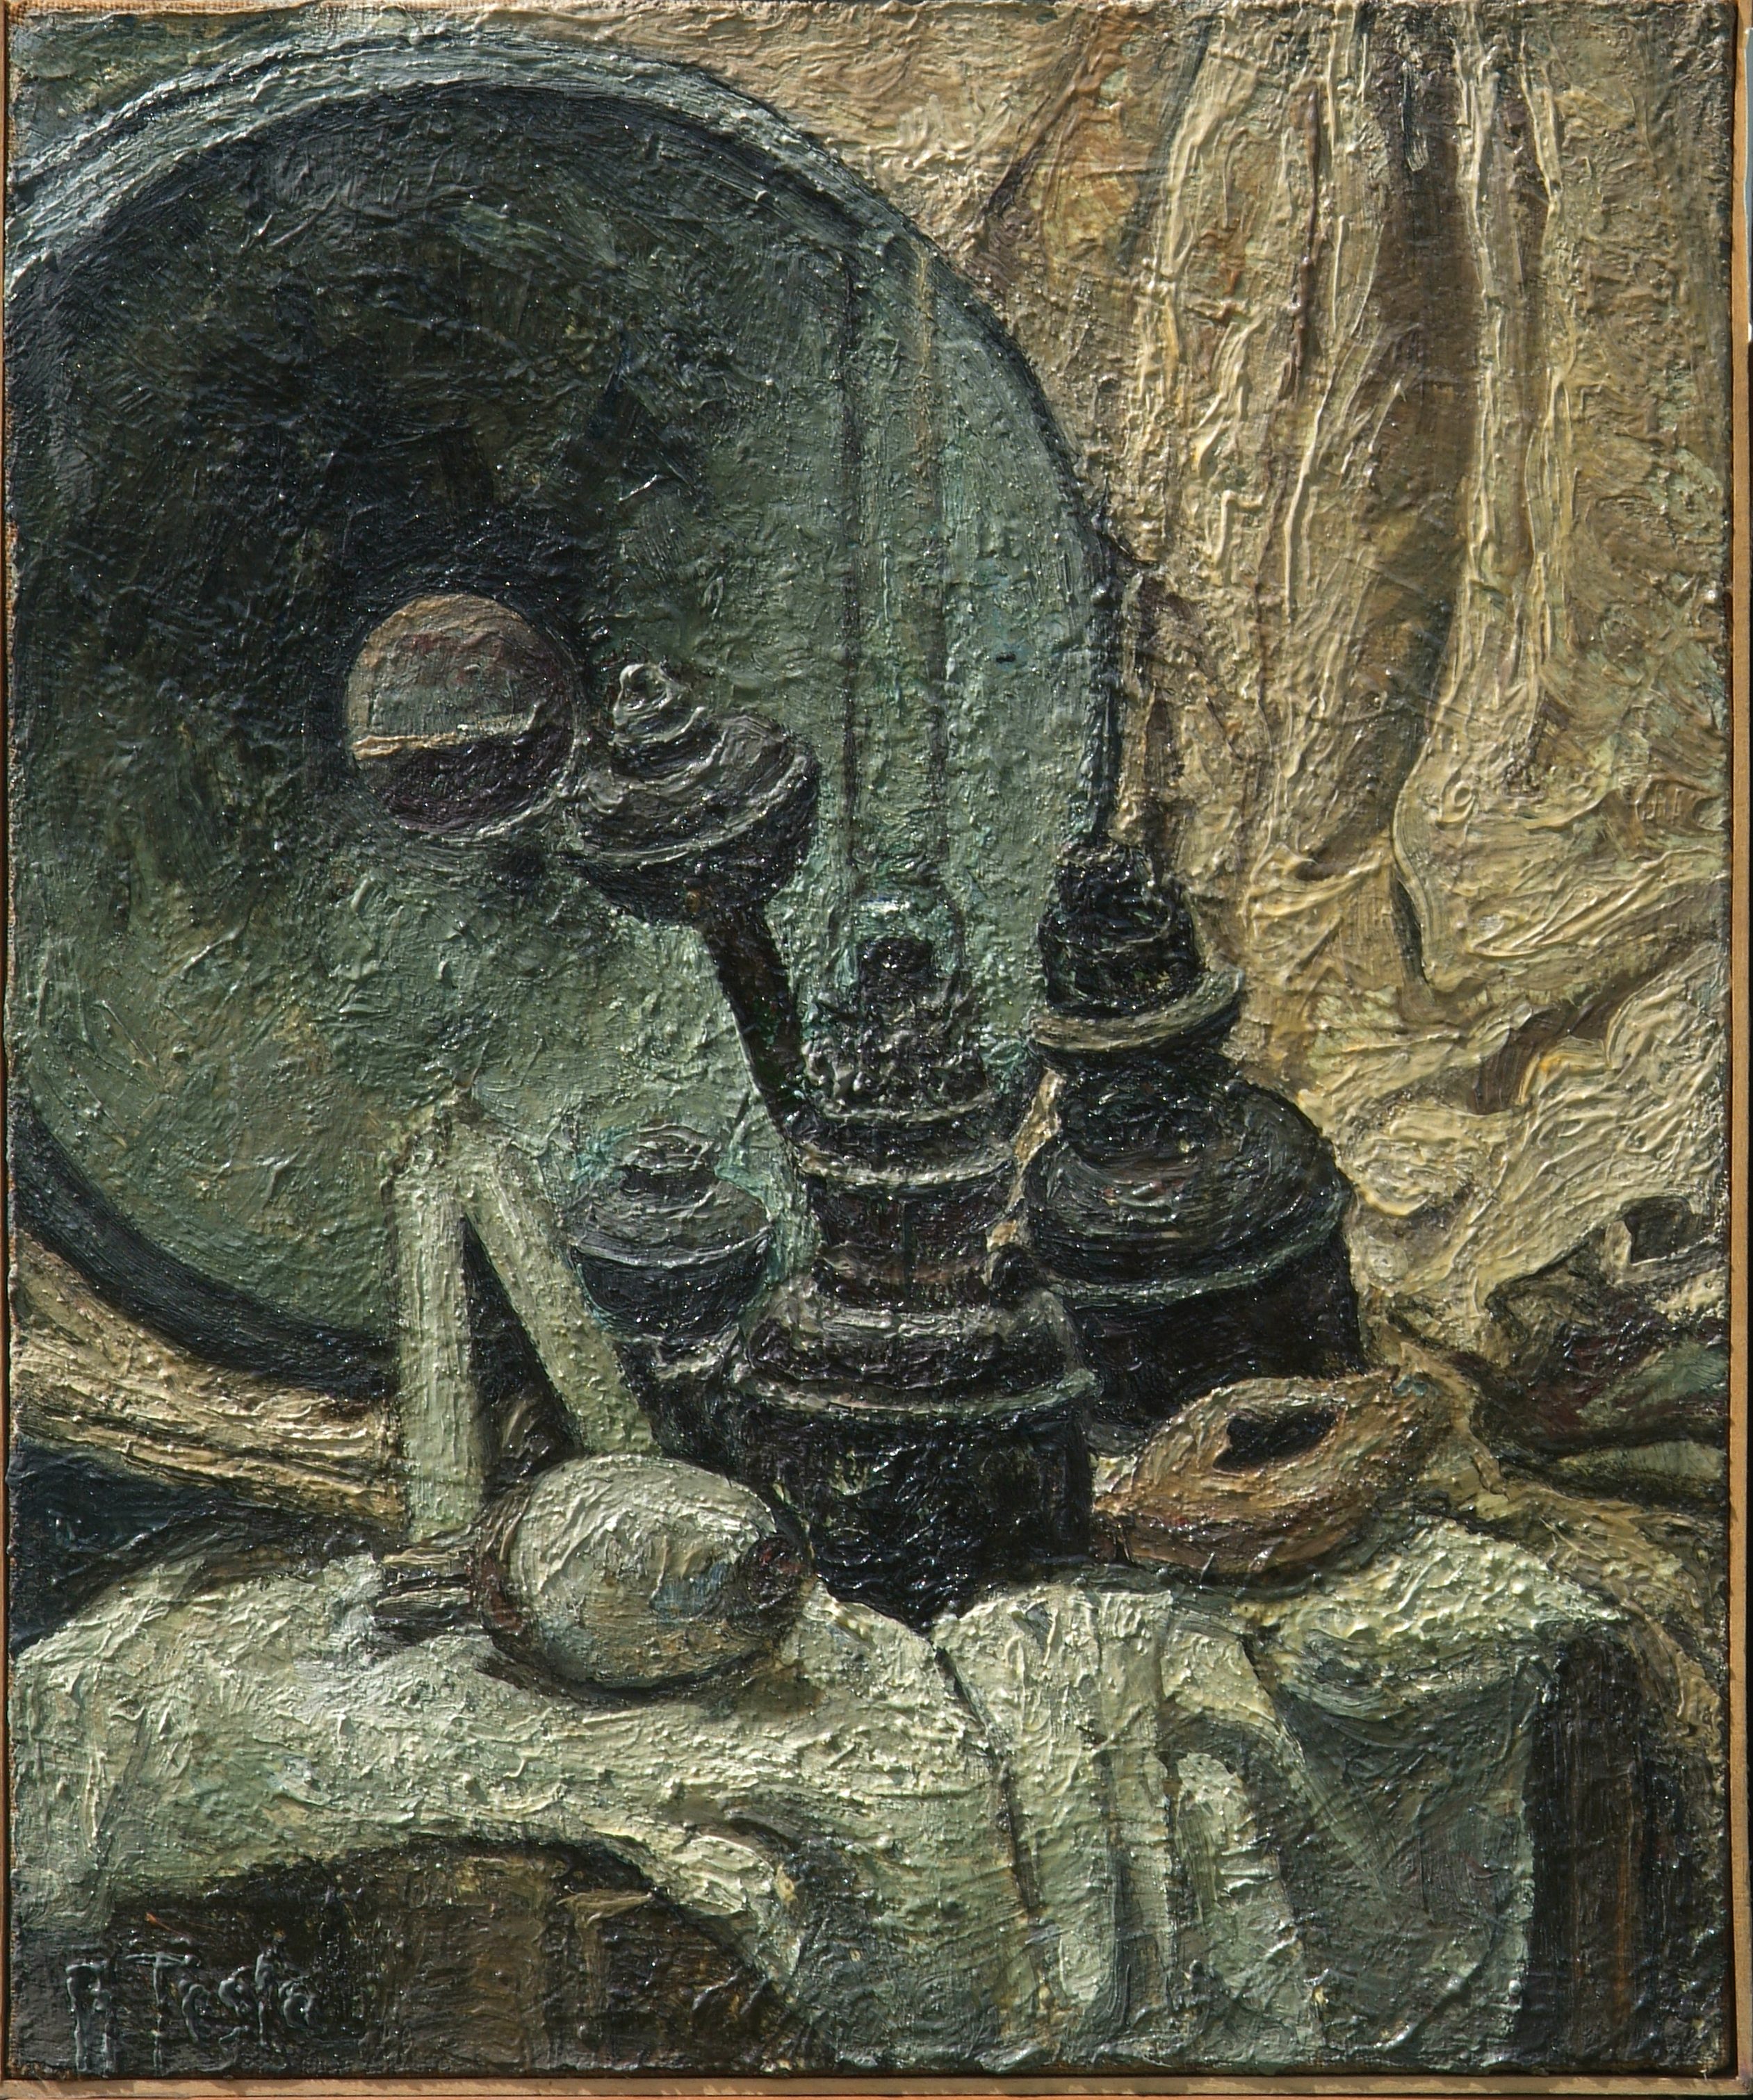 Lampade a petrolio, olio su tela, cm 50 x 50, anni ’60